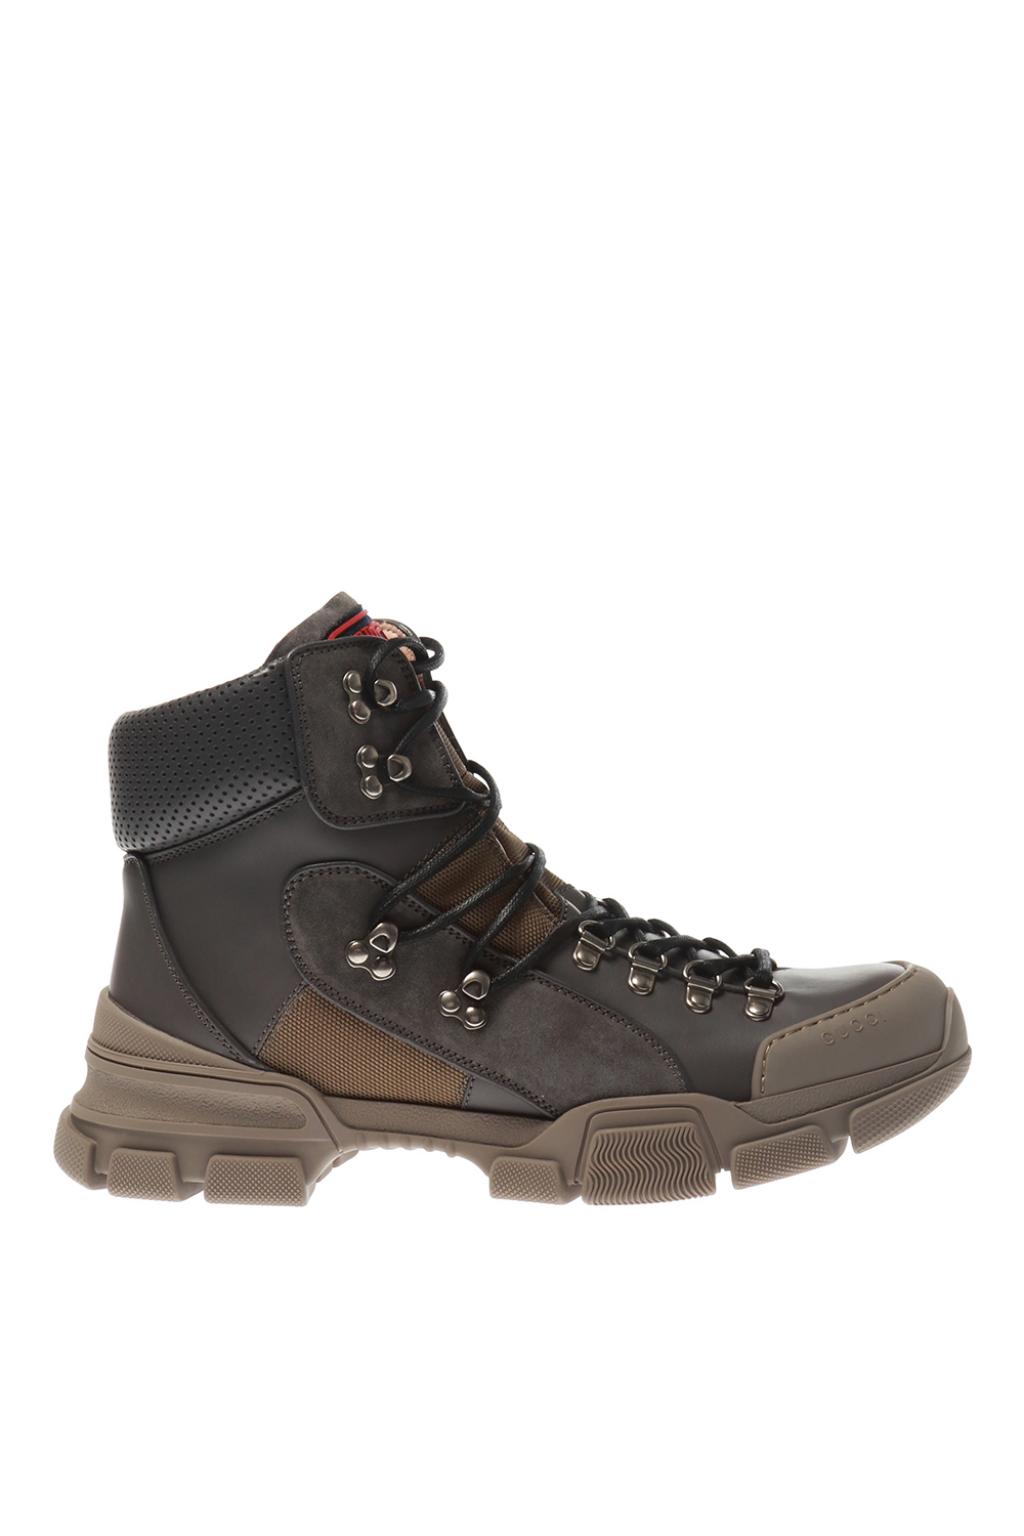 gucci flashtrek boots